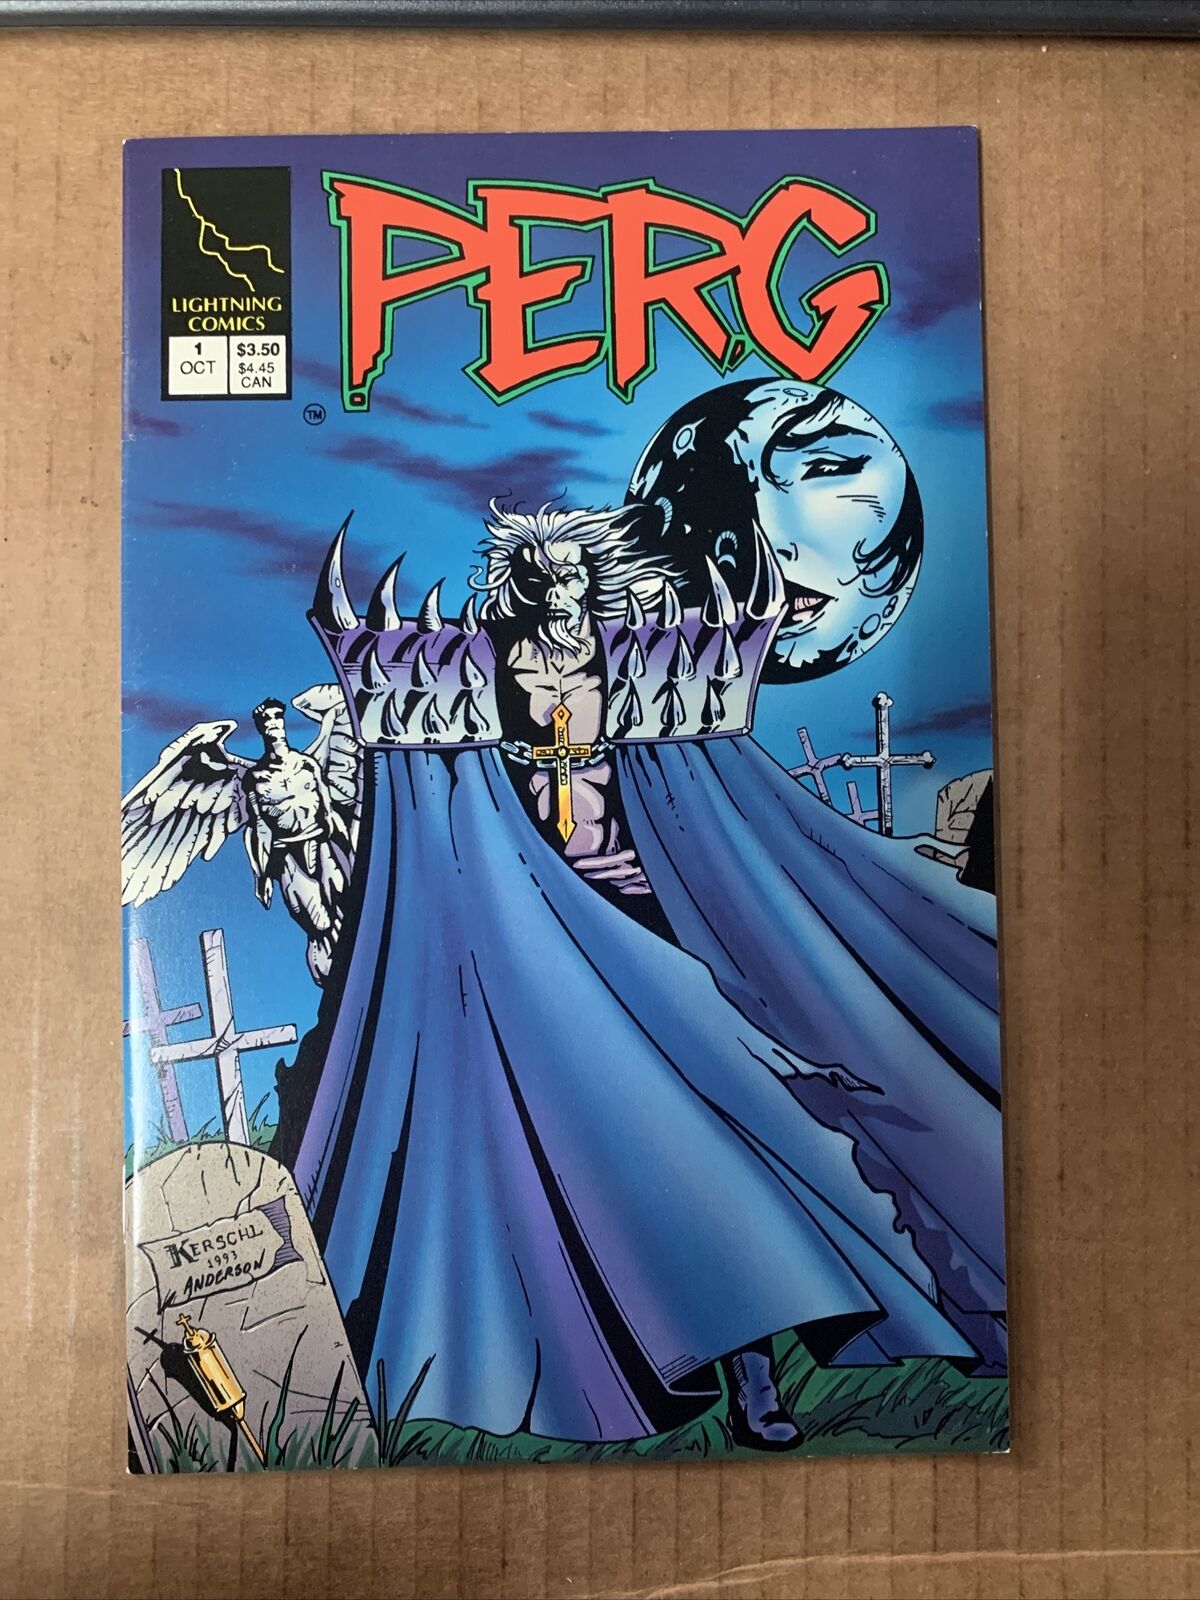 1993 Perg #1 1ST Print October Lightning Comics Glow in the Dark Back Cover